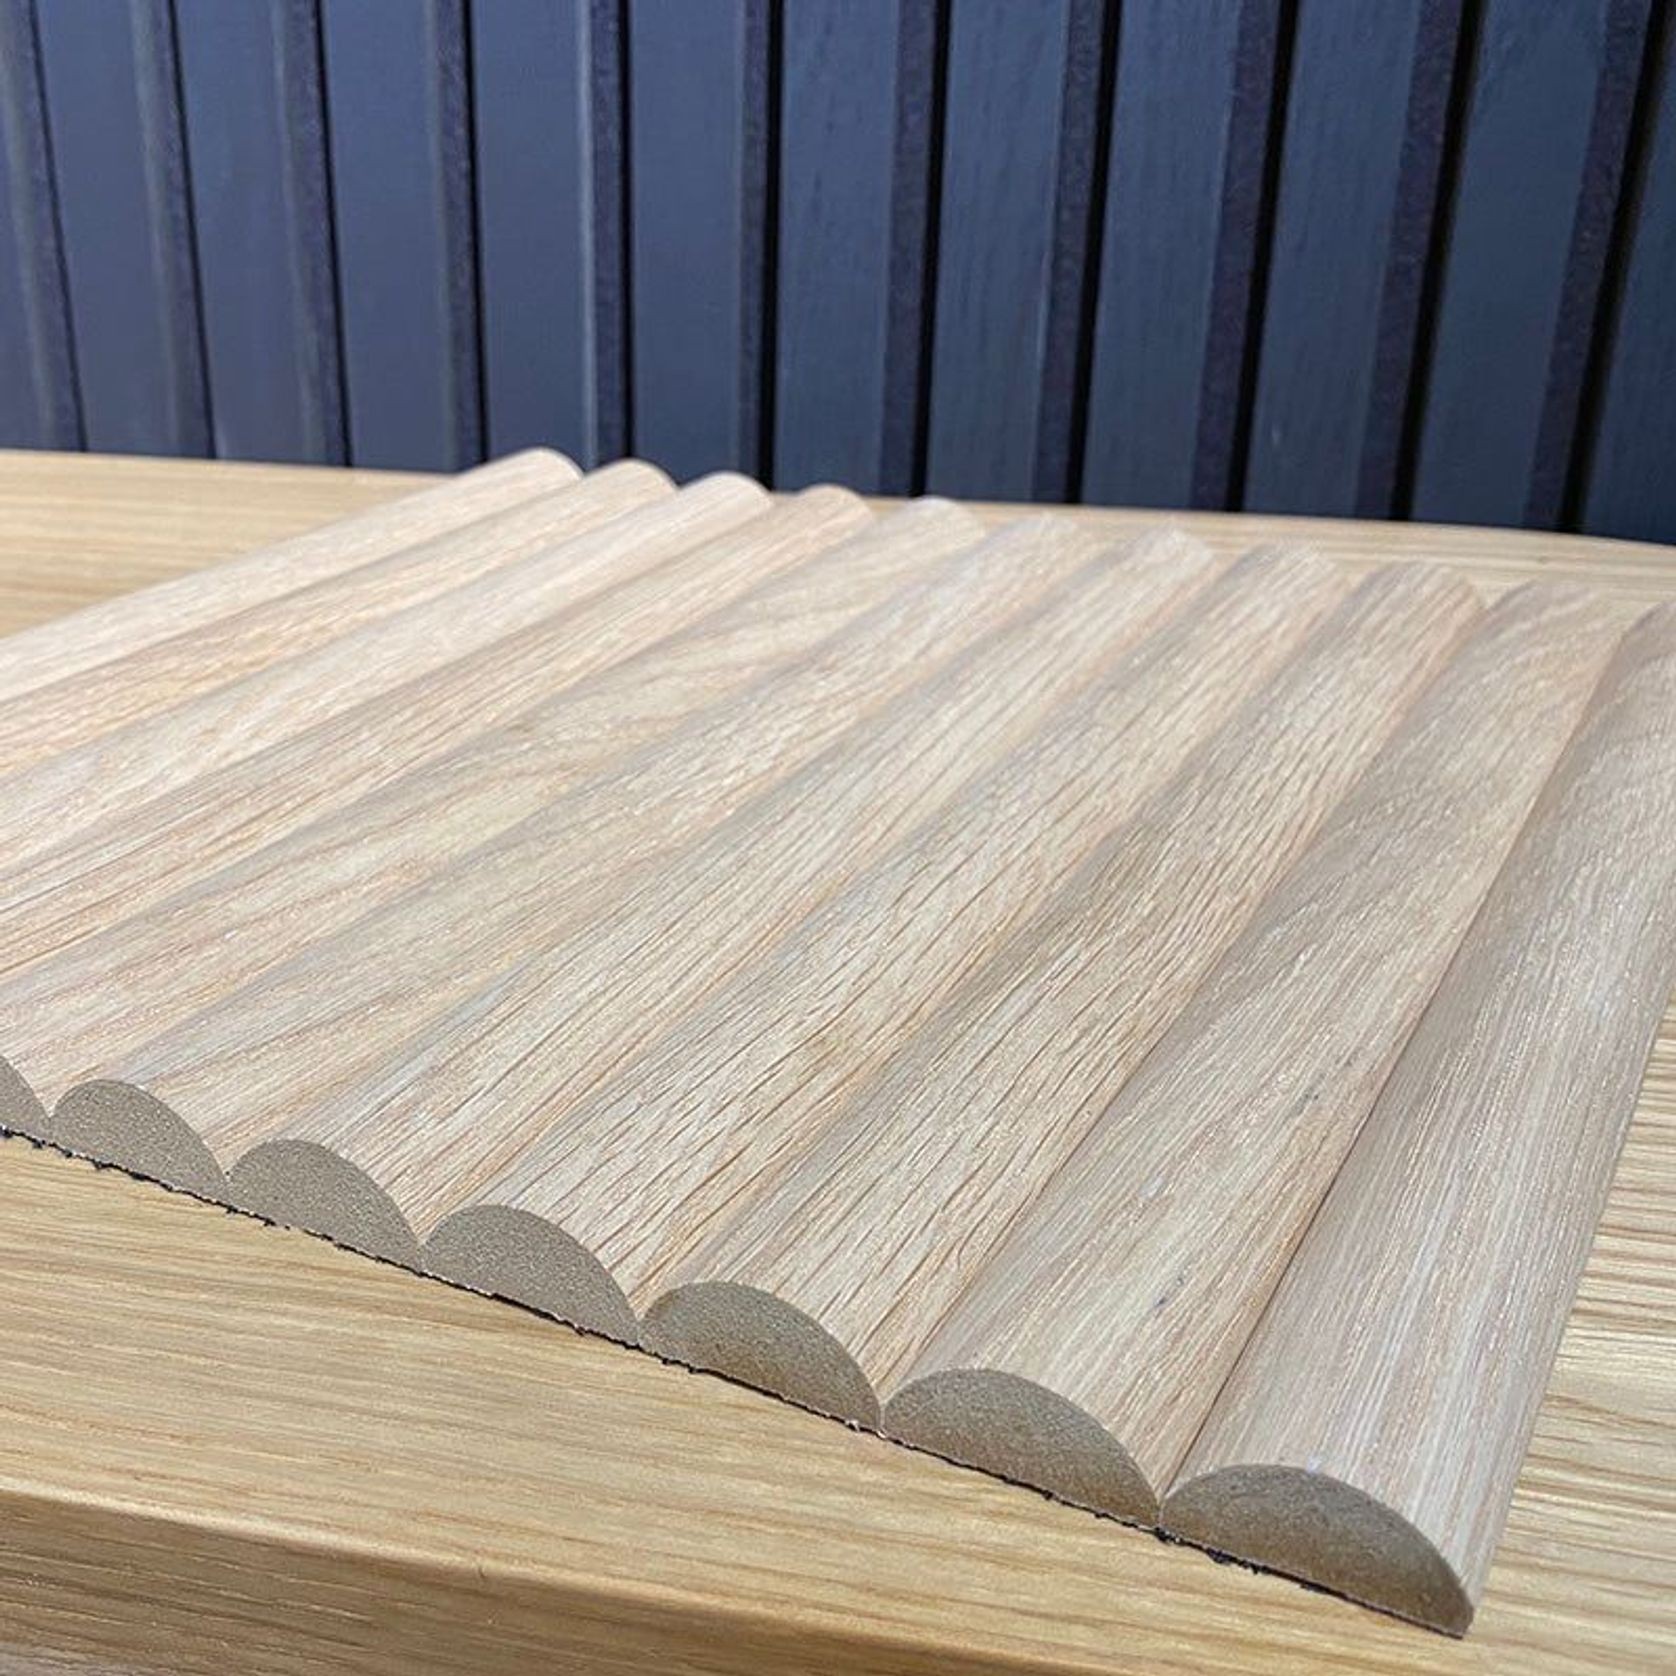 WOODFLEX Flexible Wooden Slat Wall Panel - Oak Veneer - 2700mm x 595mm - Half Round gallery detail image